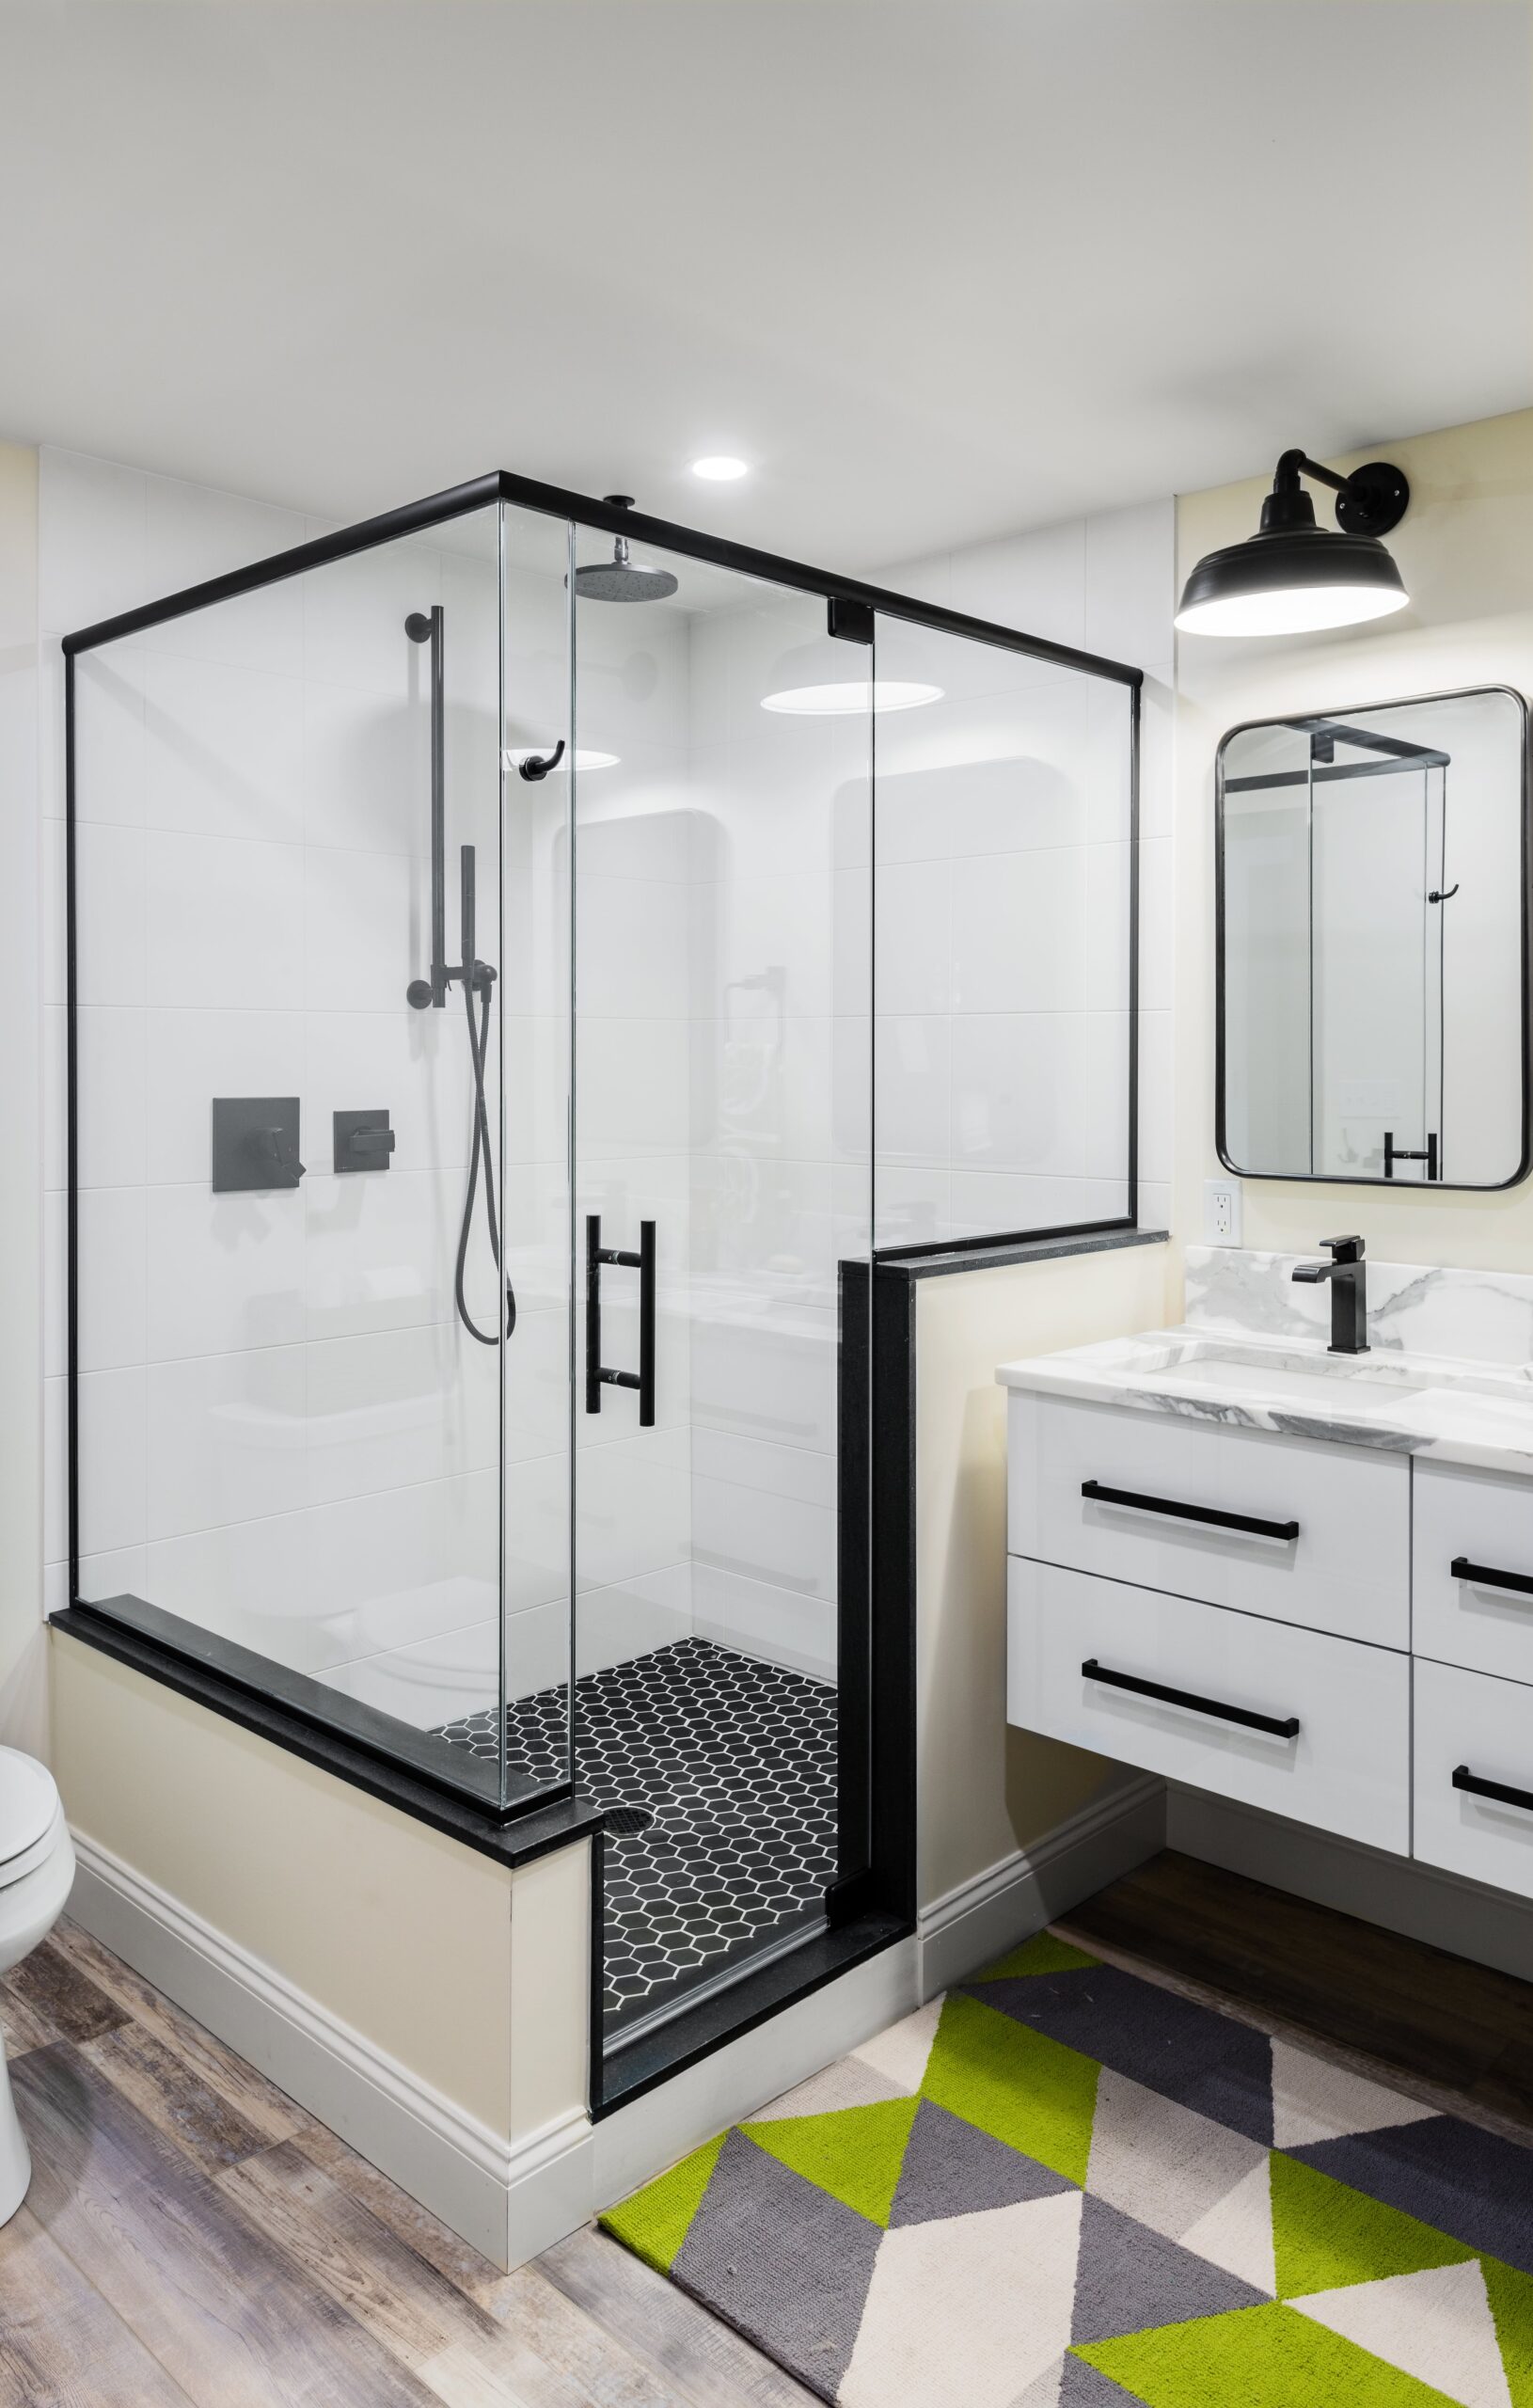 Modern bathroom remodel with black tile and glass shower door